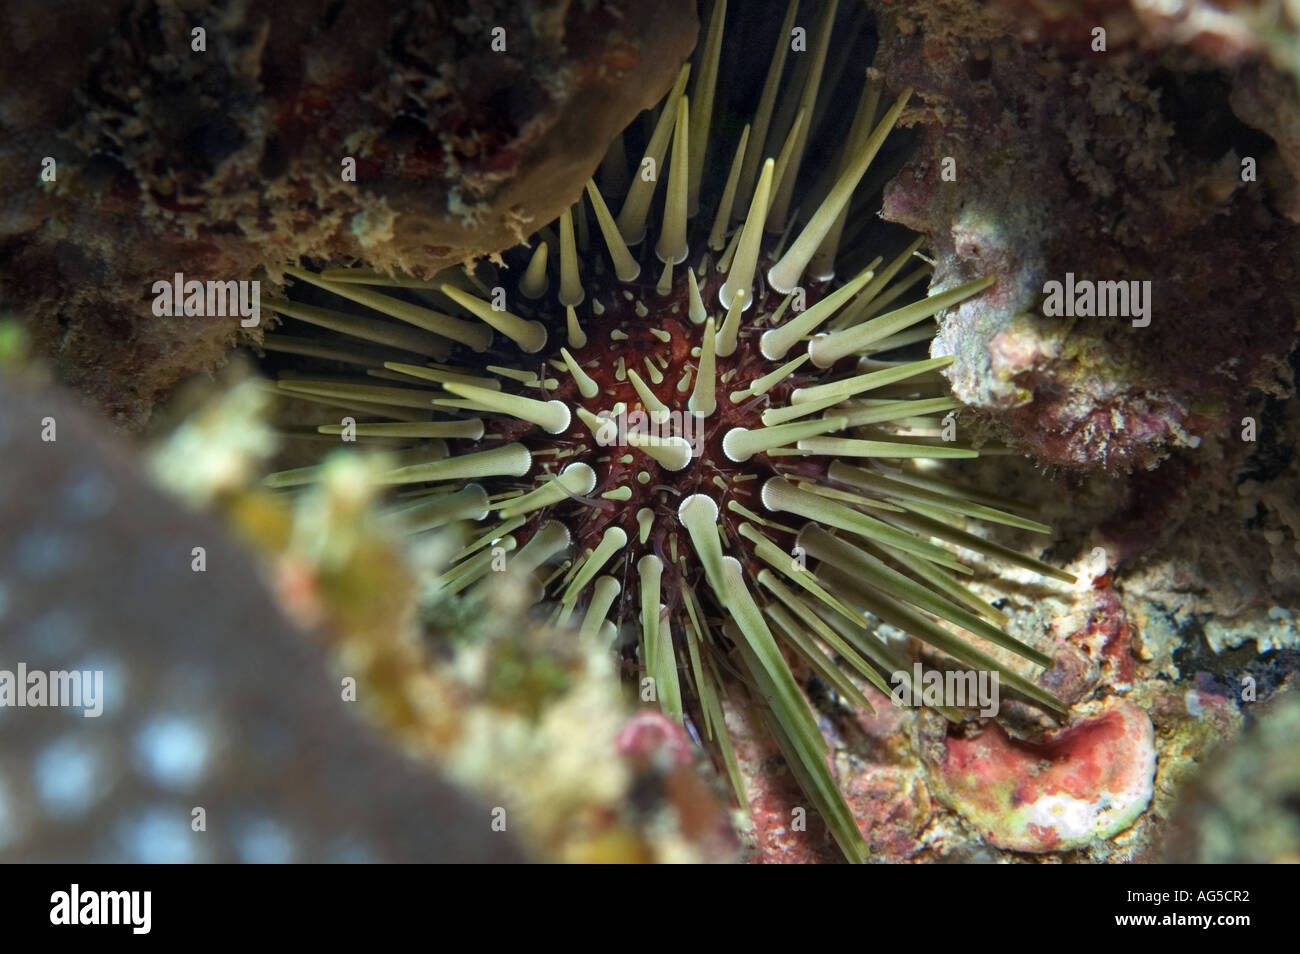 close-up of urchin Stock Photo